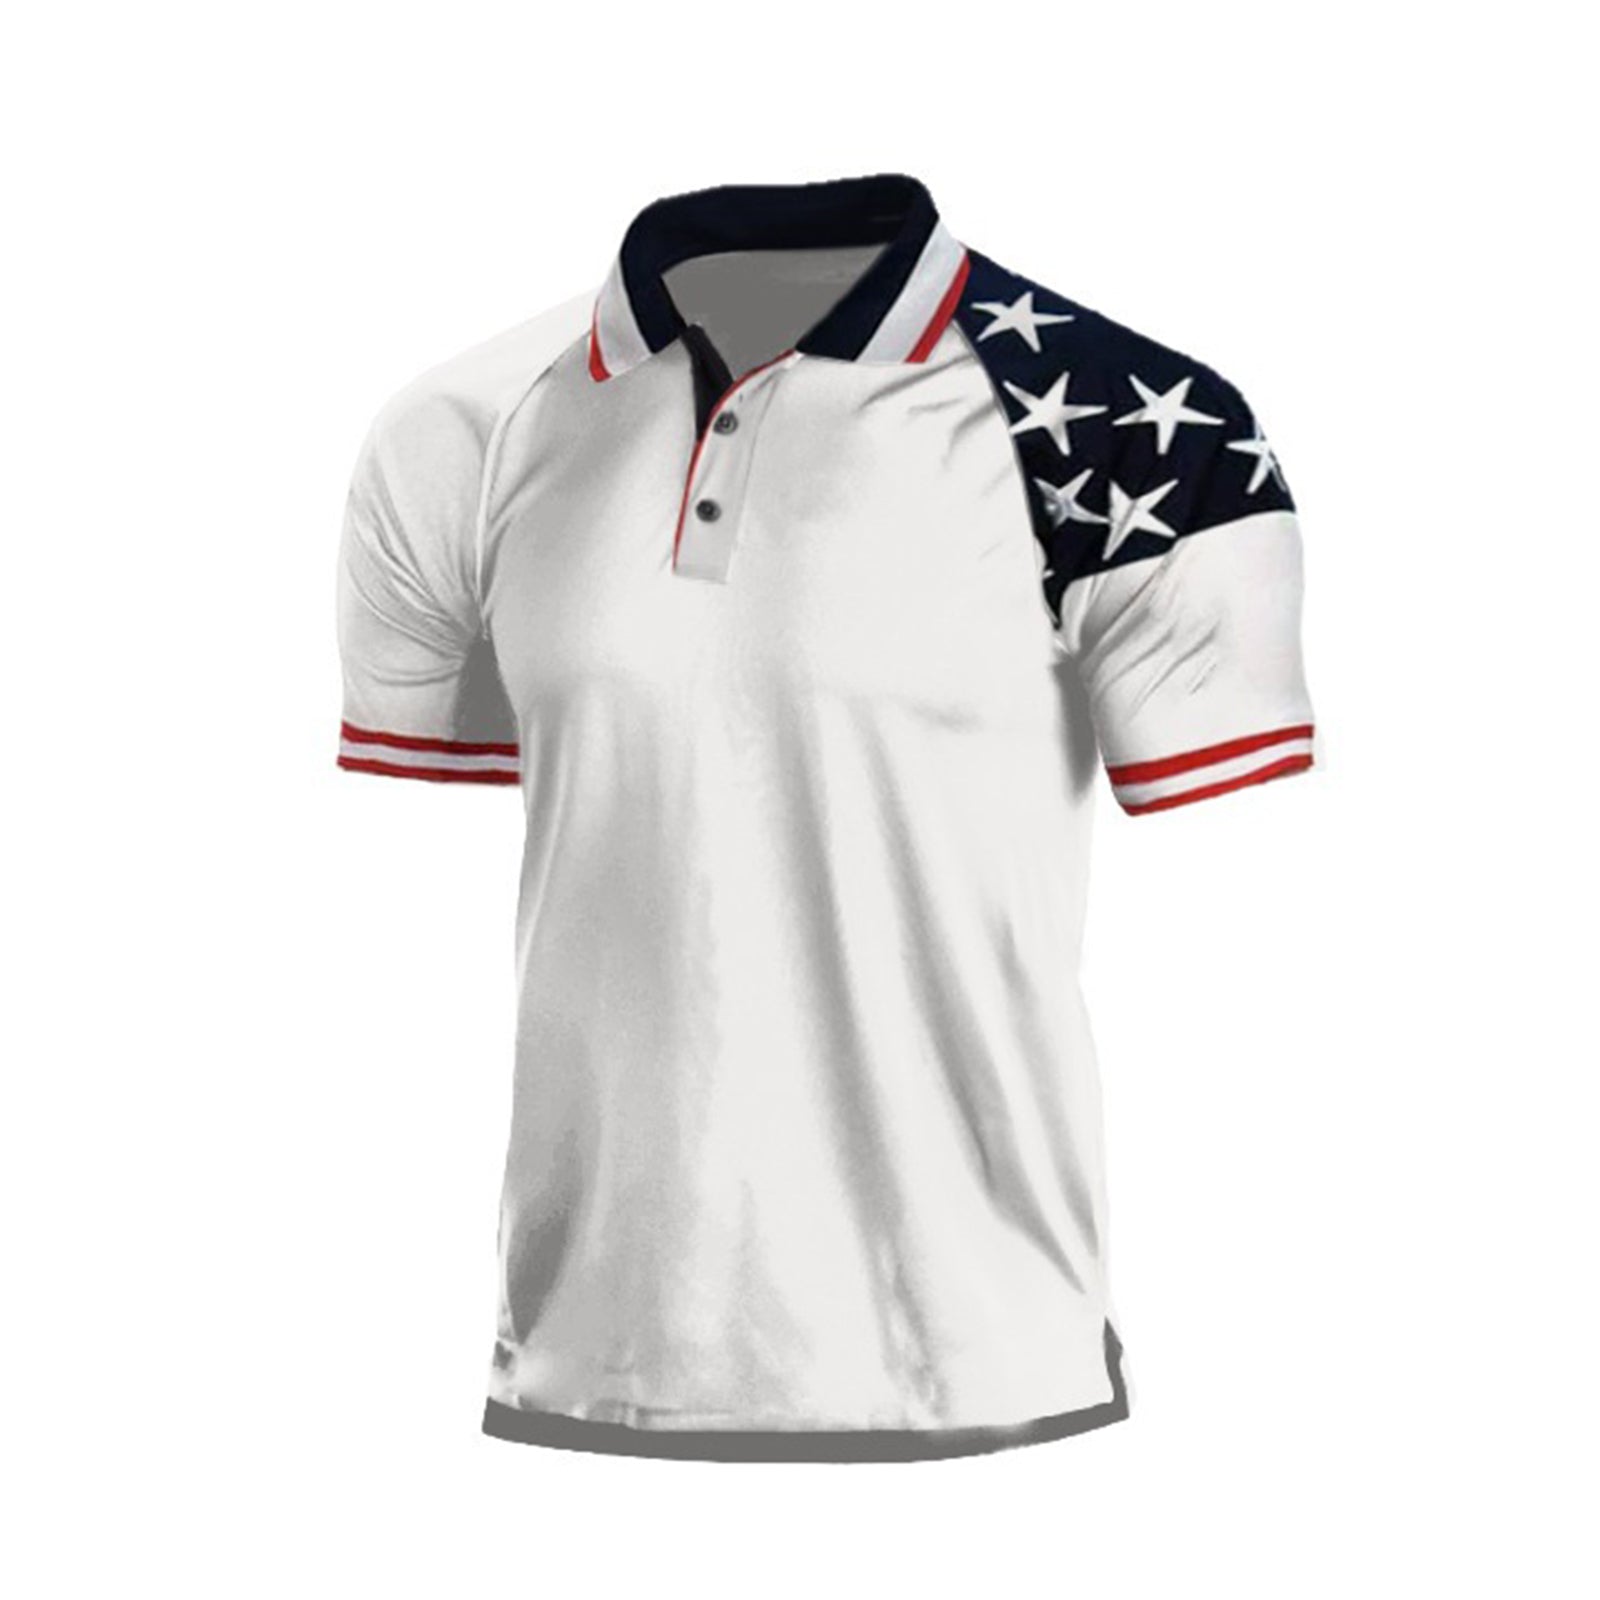 Hyfol Patriotic Collared Shirts For Men | USA Flag Raglan Graphic Polo ...